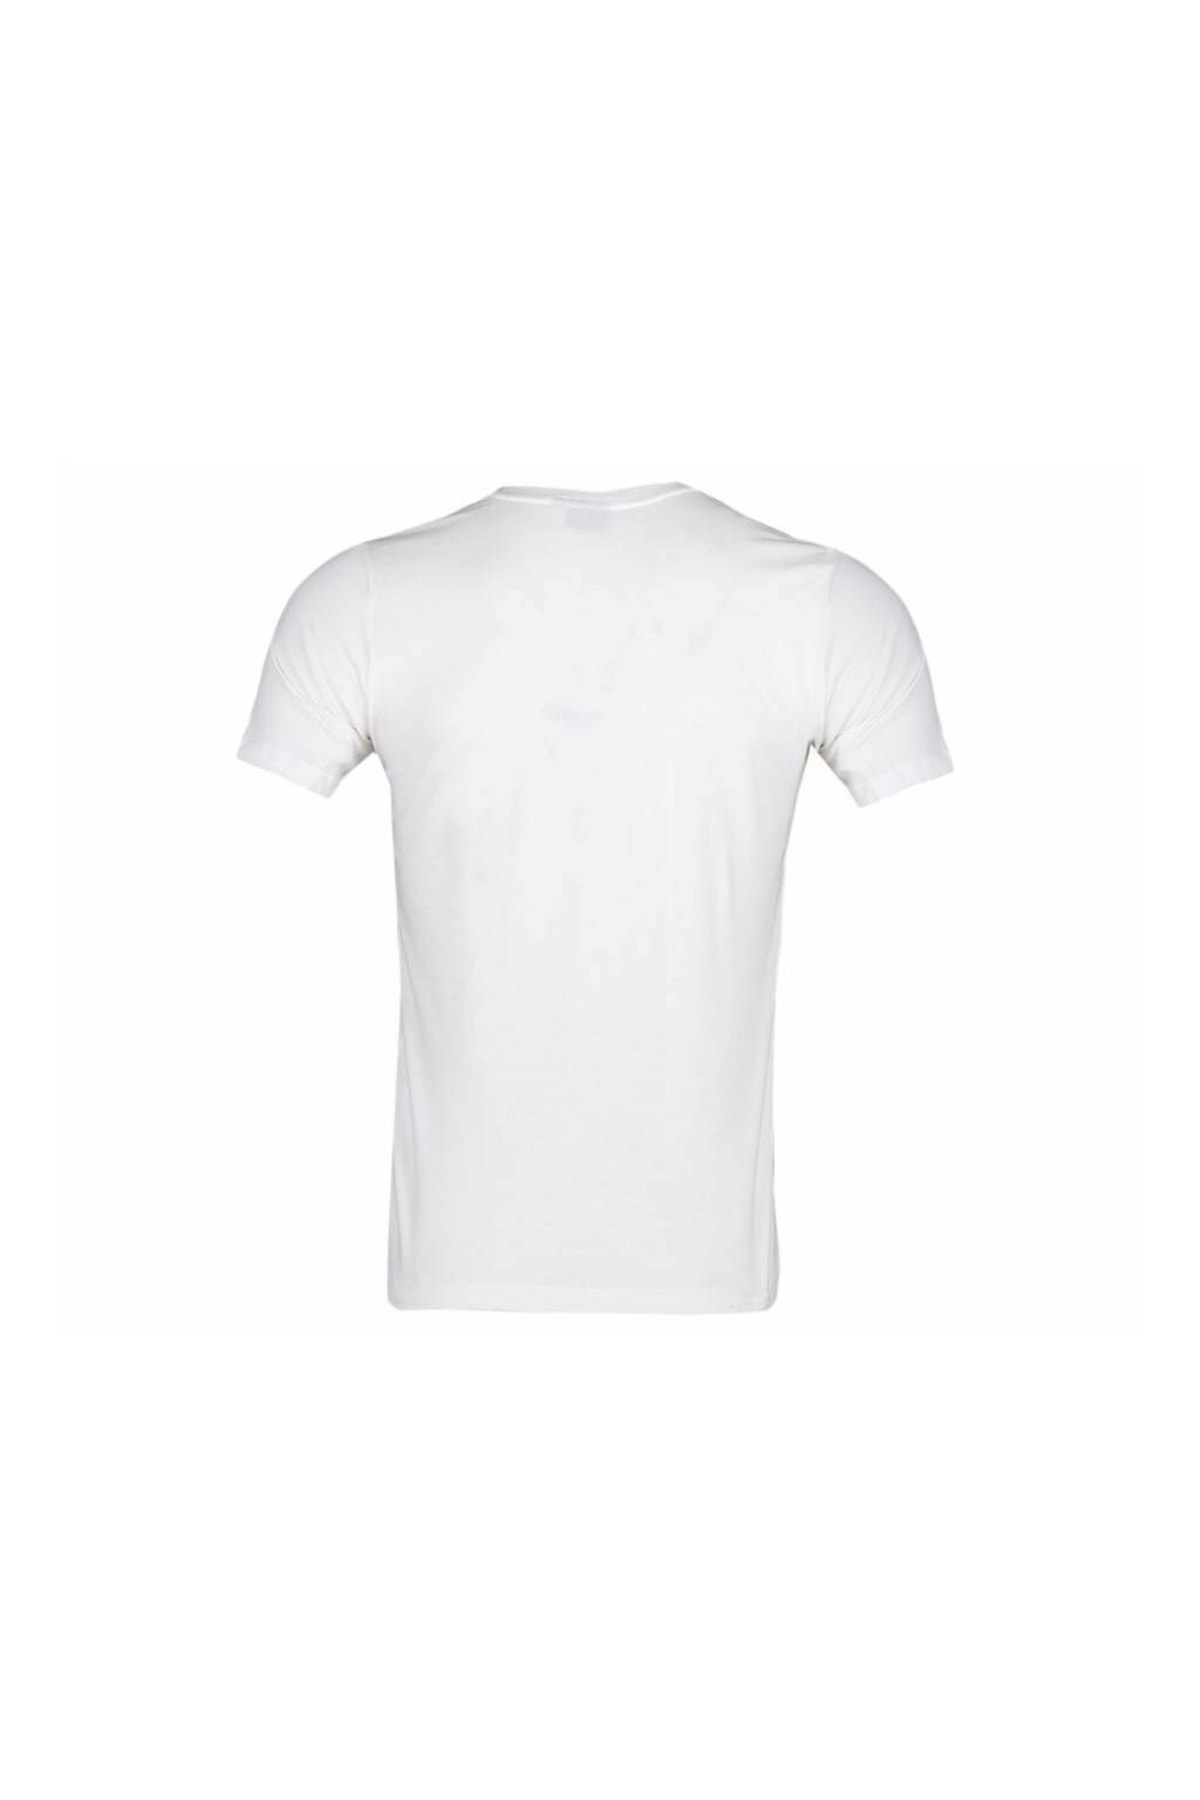 HUMMEL تی شرت یقه خدمه مردانه چاپ سفید تیسام